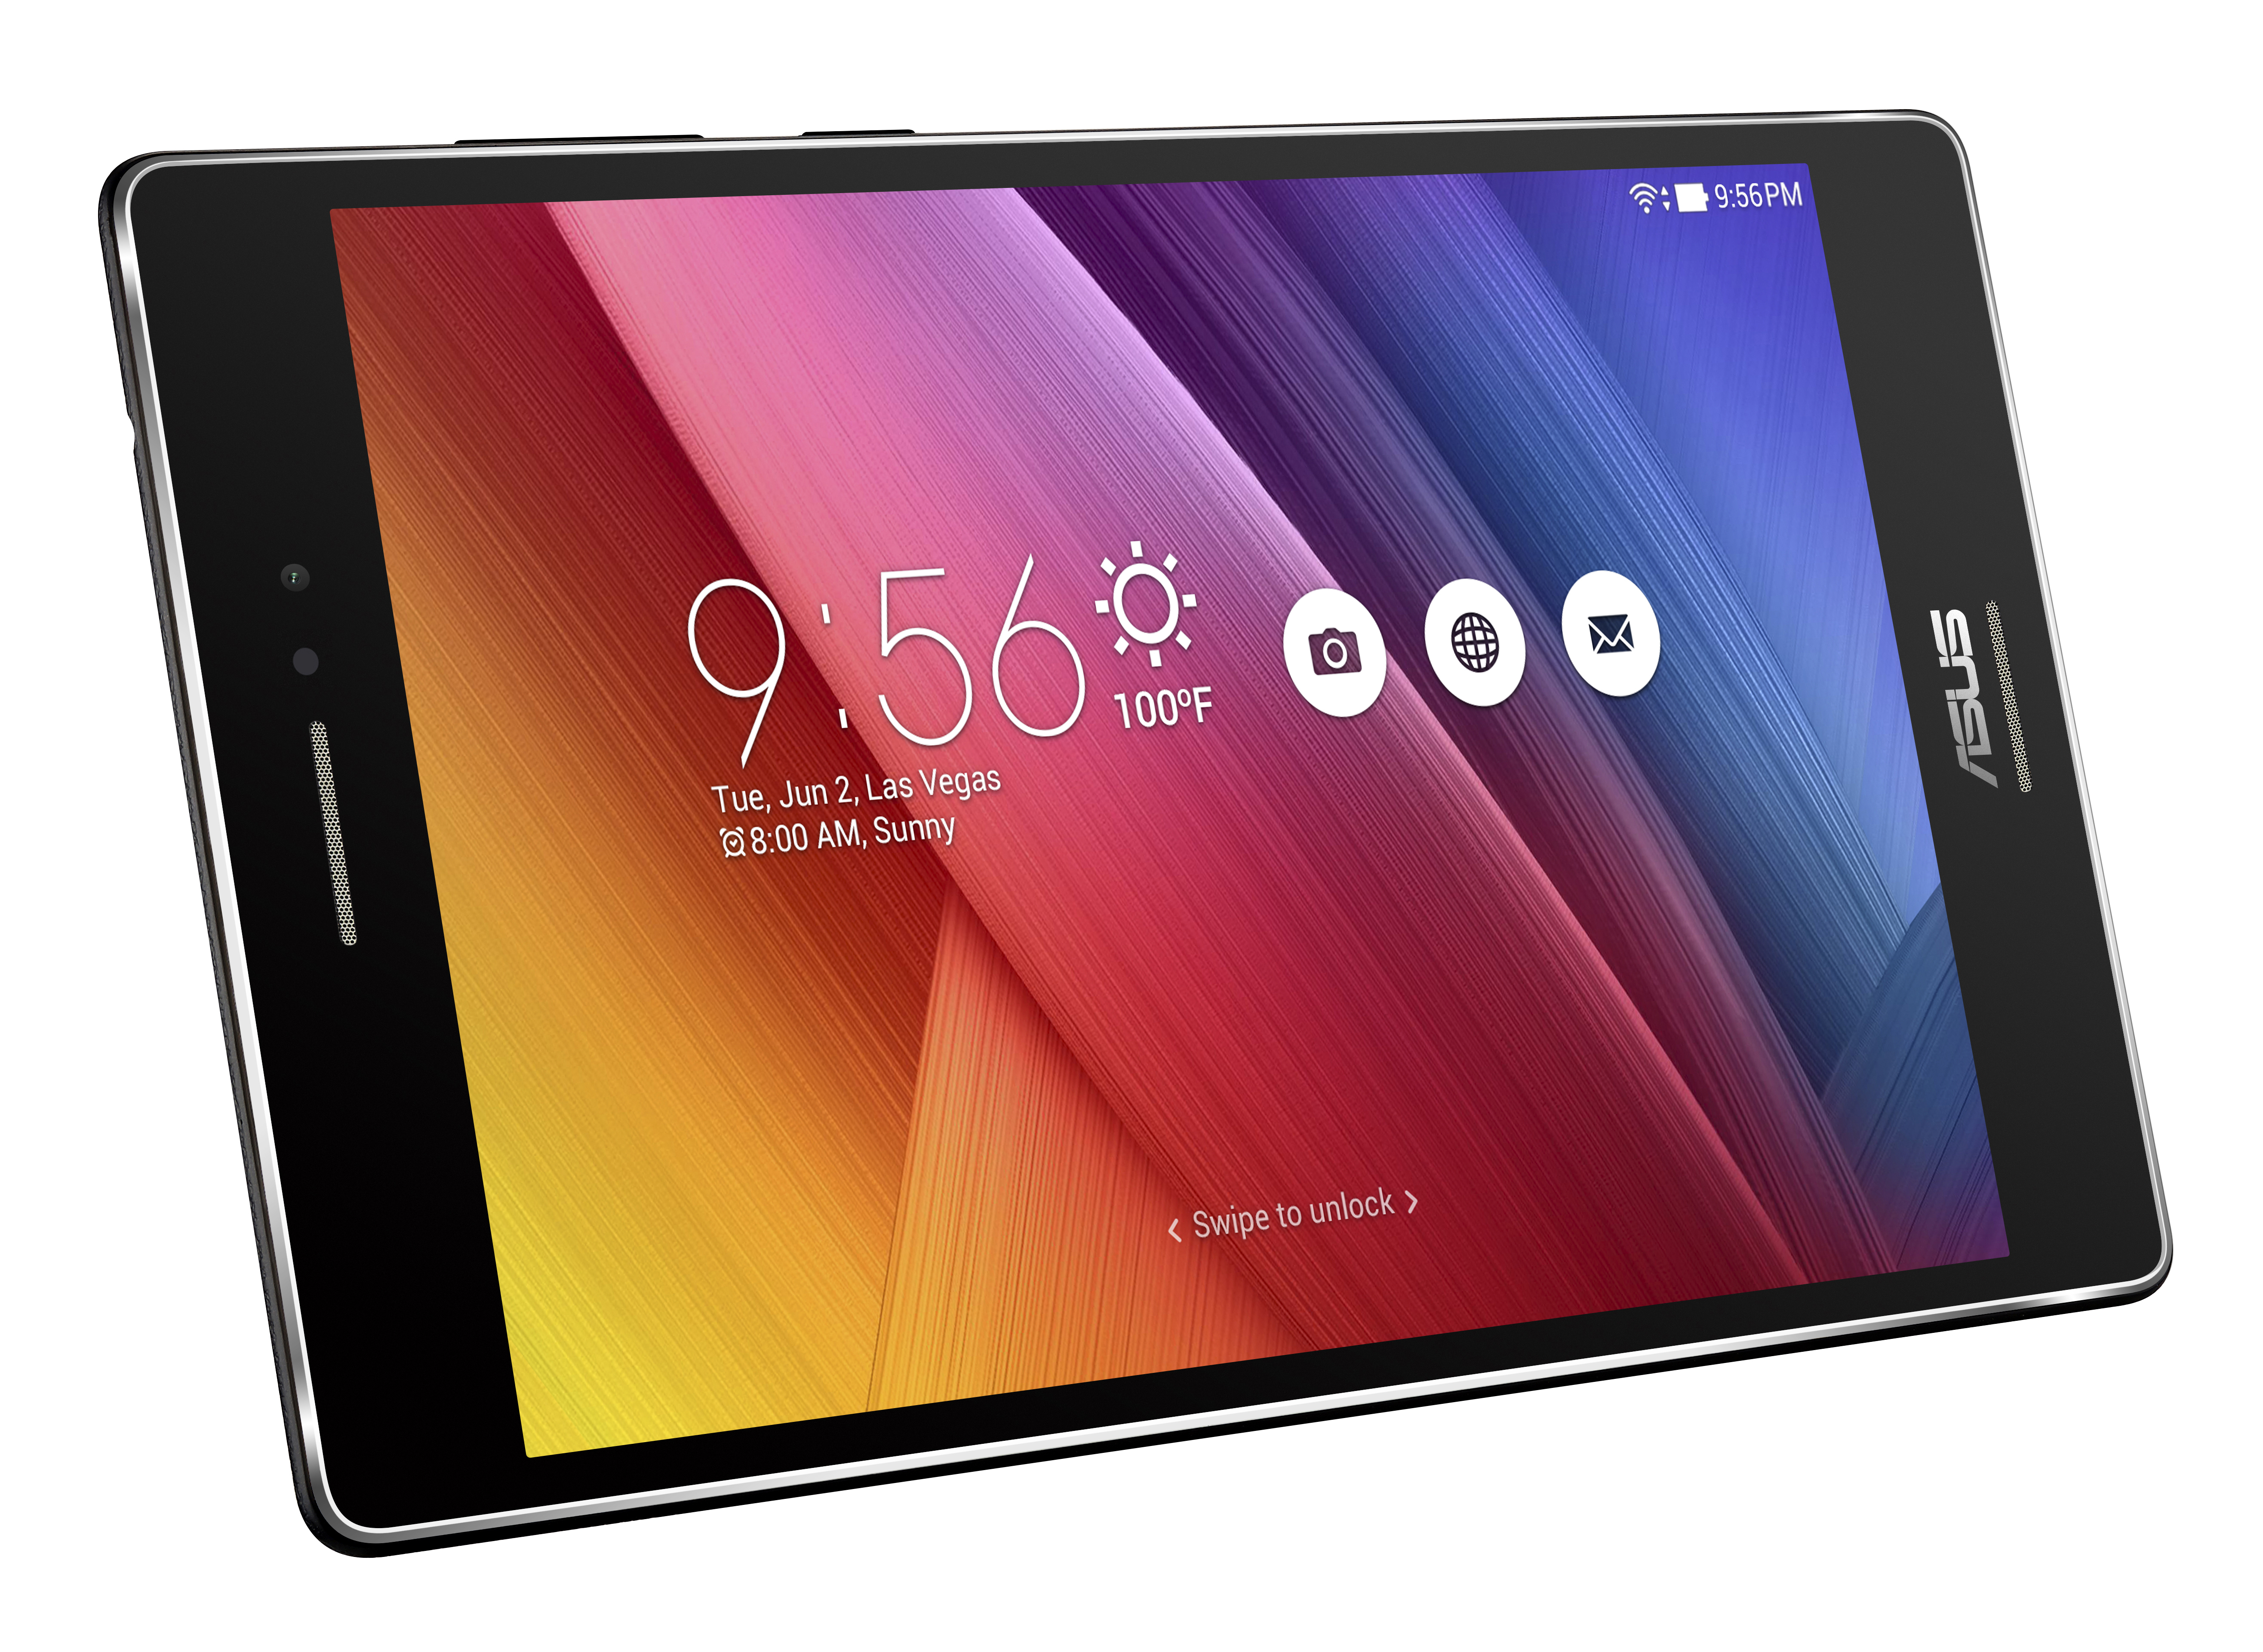 Asus Zenpad S 8 0 Z580ca Tablet Review Notebookcheck Net Reviews